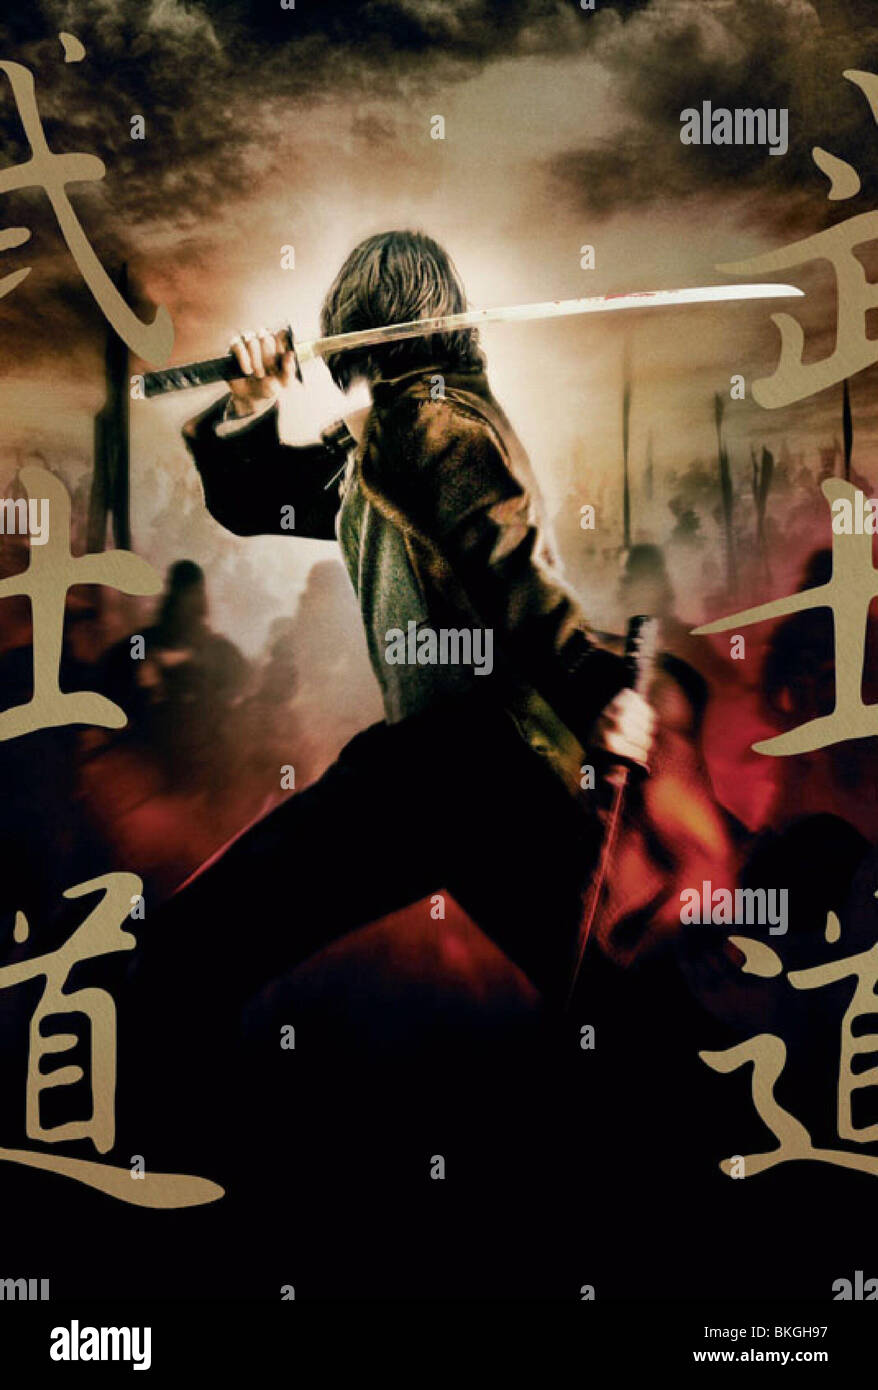 Le dernier samouraï (2003) POSTER LSMU-AQ 002 Banque D'Images